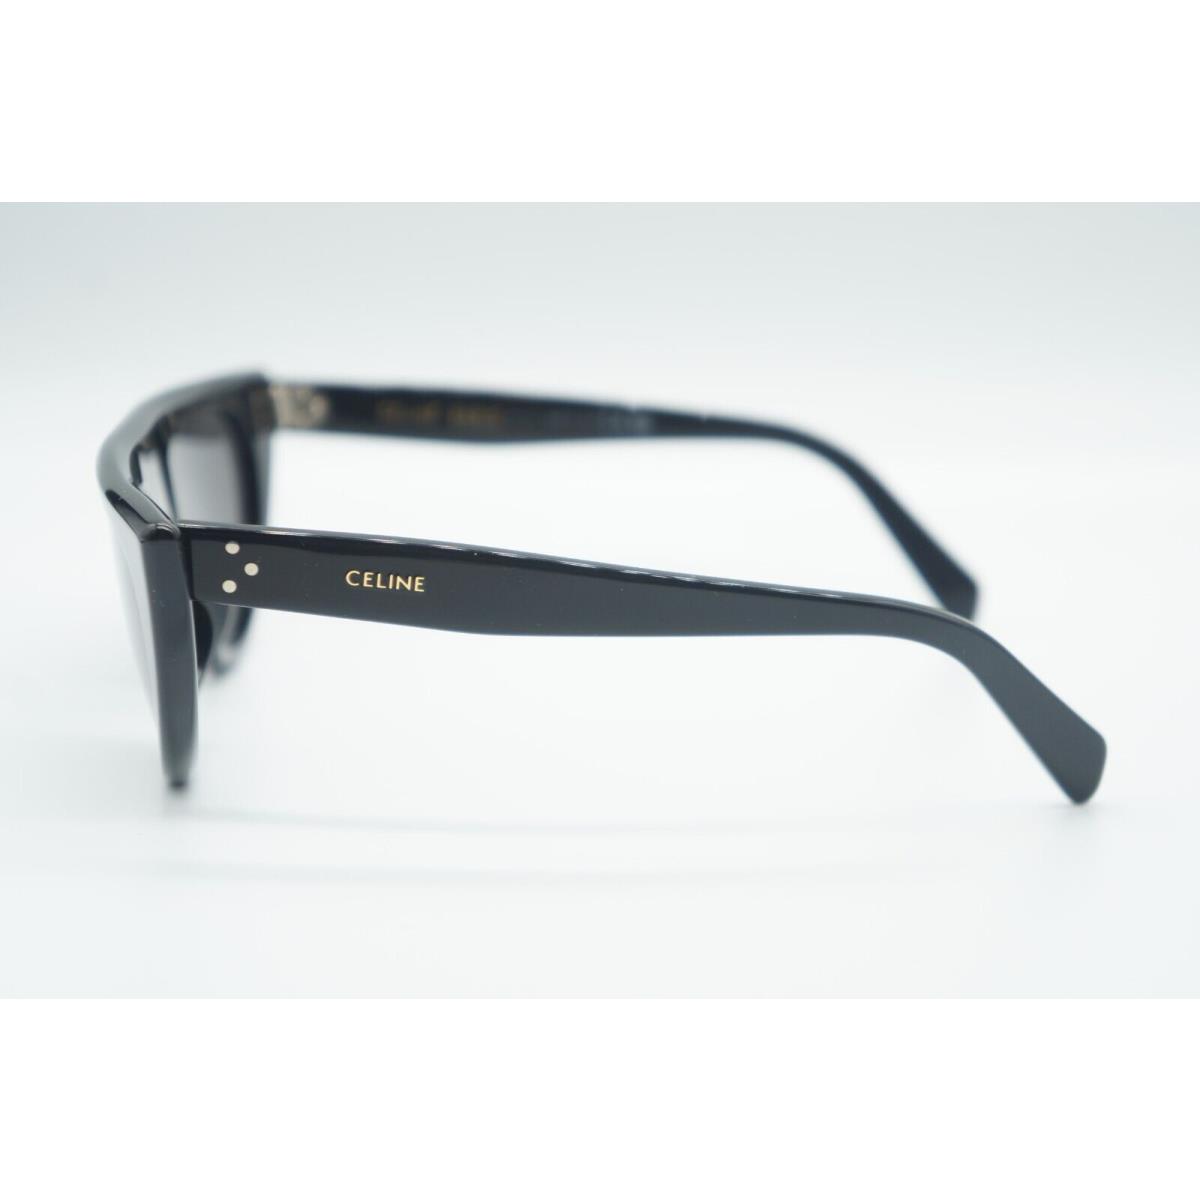 Celine eyeglasses  - Frame: Black 2